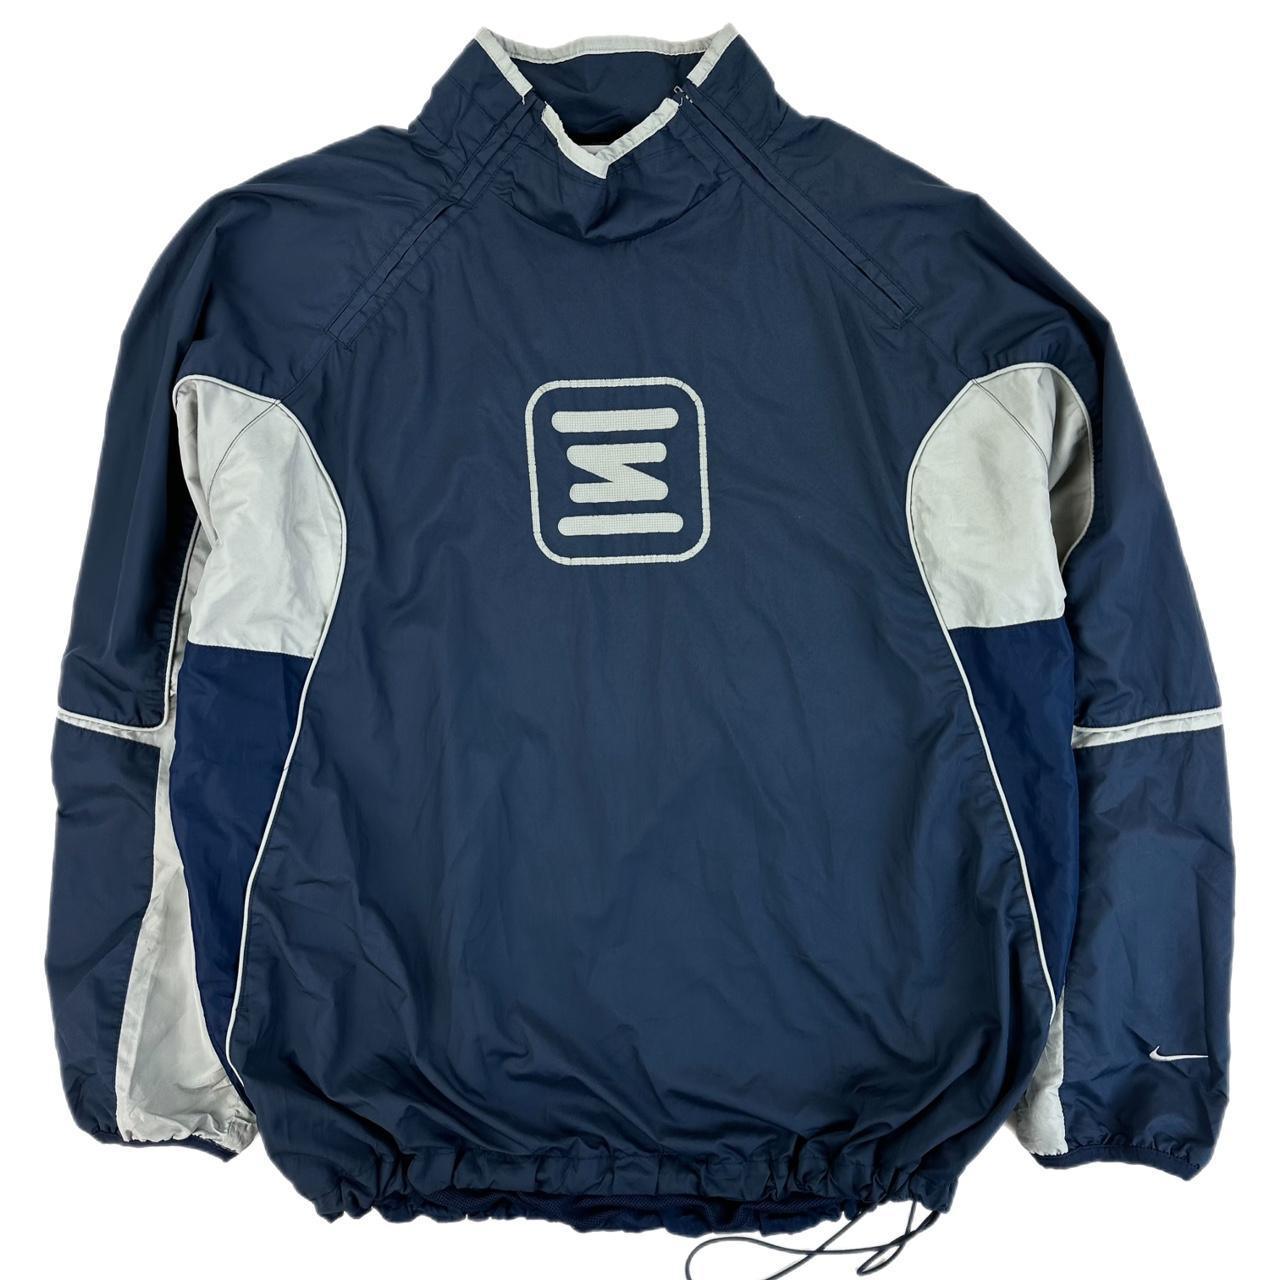 Vintage Nike Shox Neck Zip Jacket Size XL - Known Source